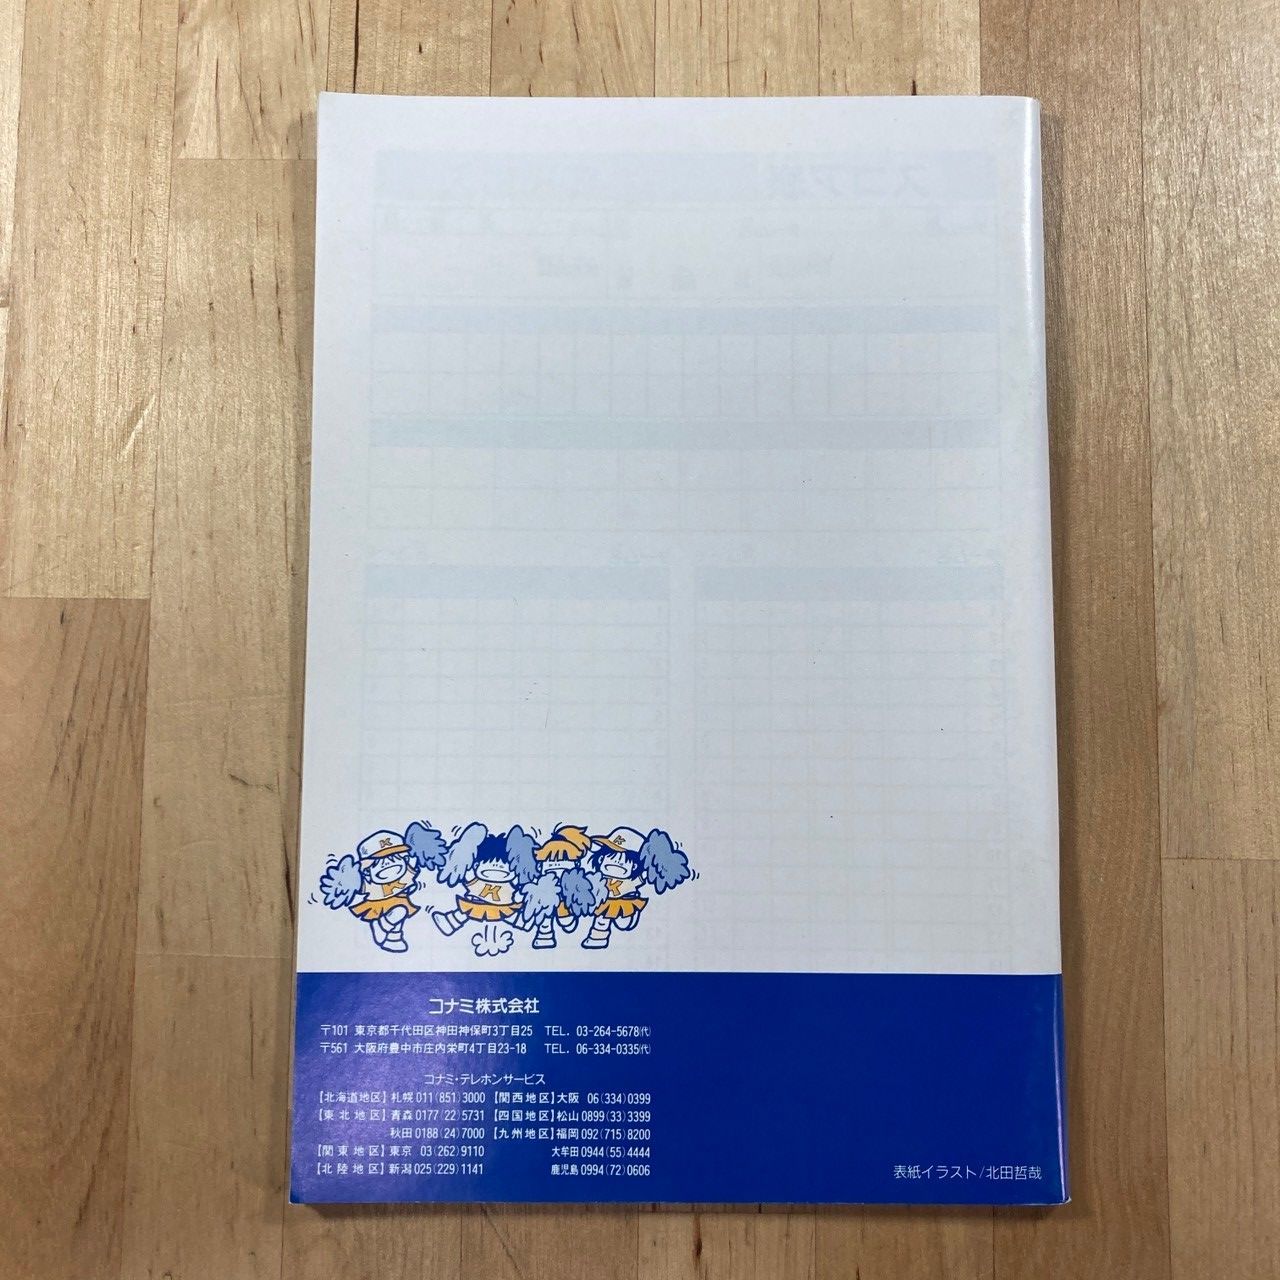 MSX2 激突ペナントレース2 KONAMI コナミ 野球ゲーム 取扱説明書のみ ...